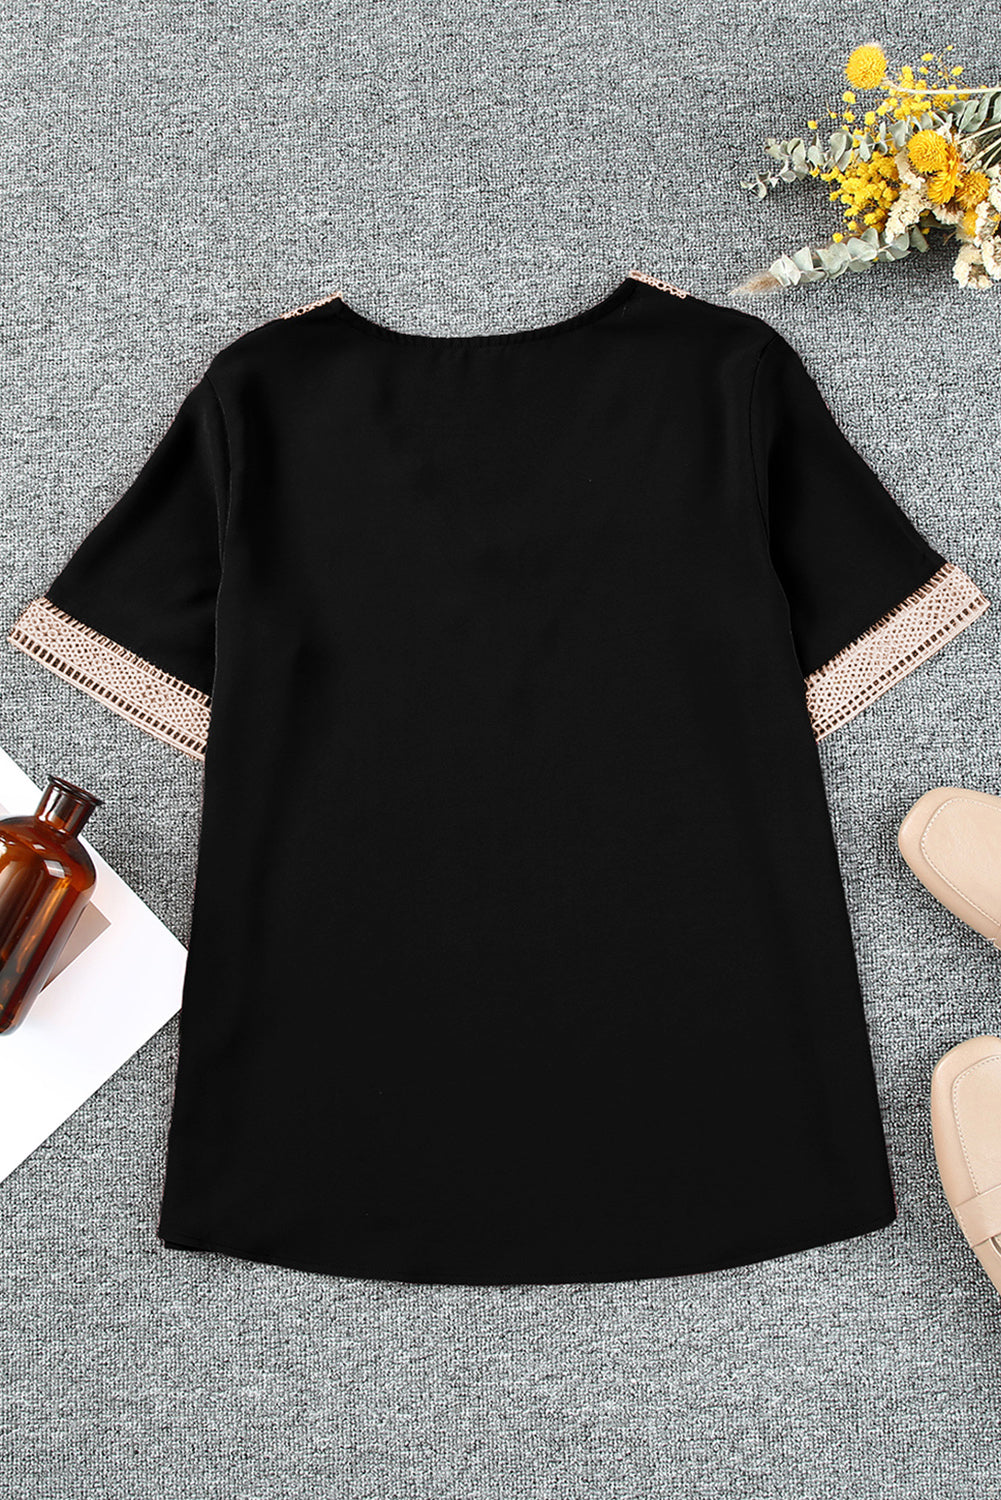 Black Lace Trim Short Sleeve V Neck Plus Size Top - SELFTRITSS